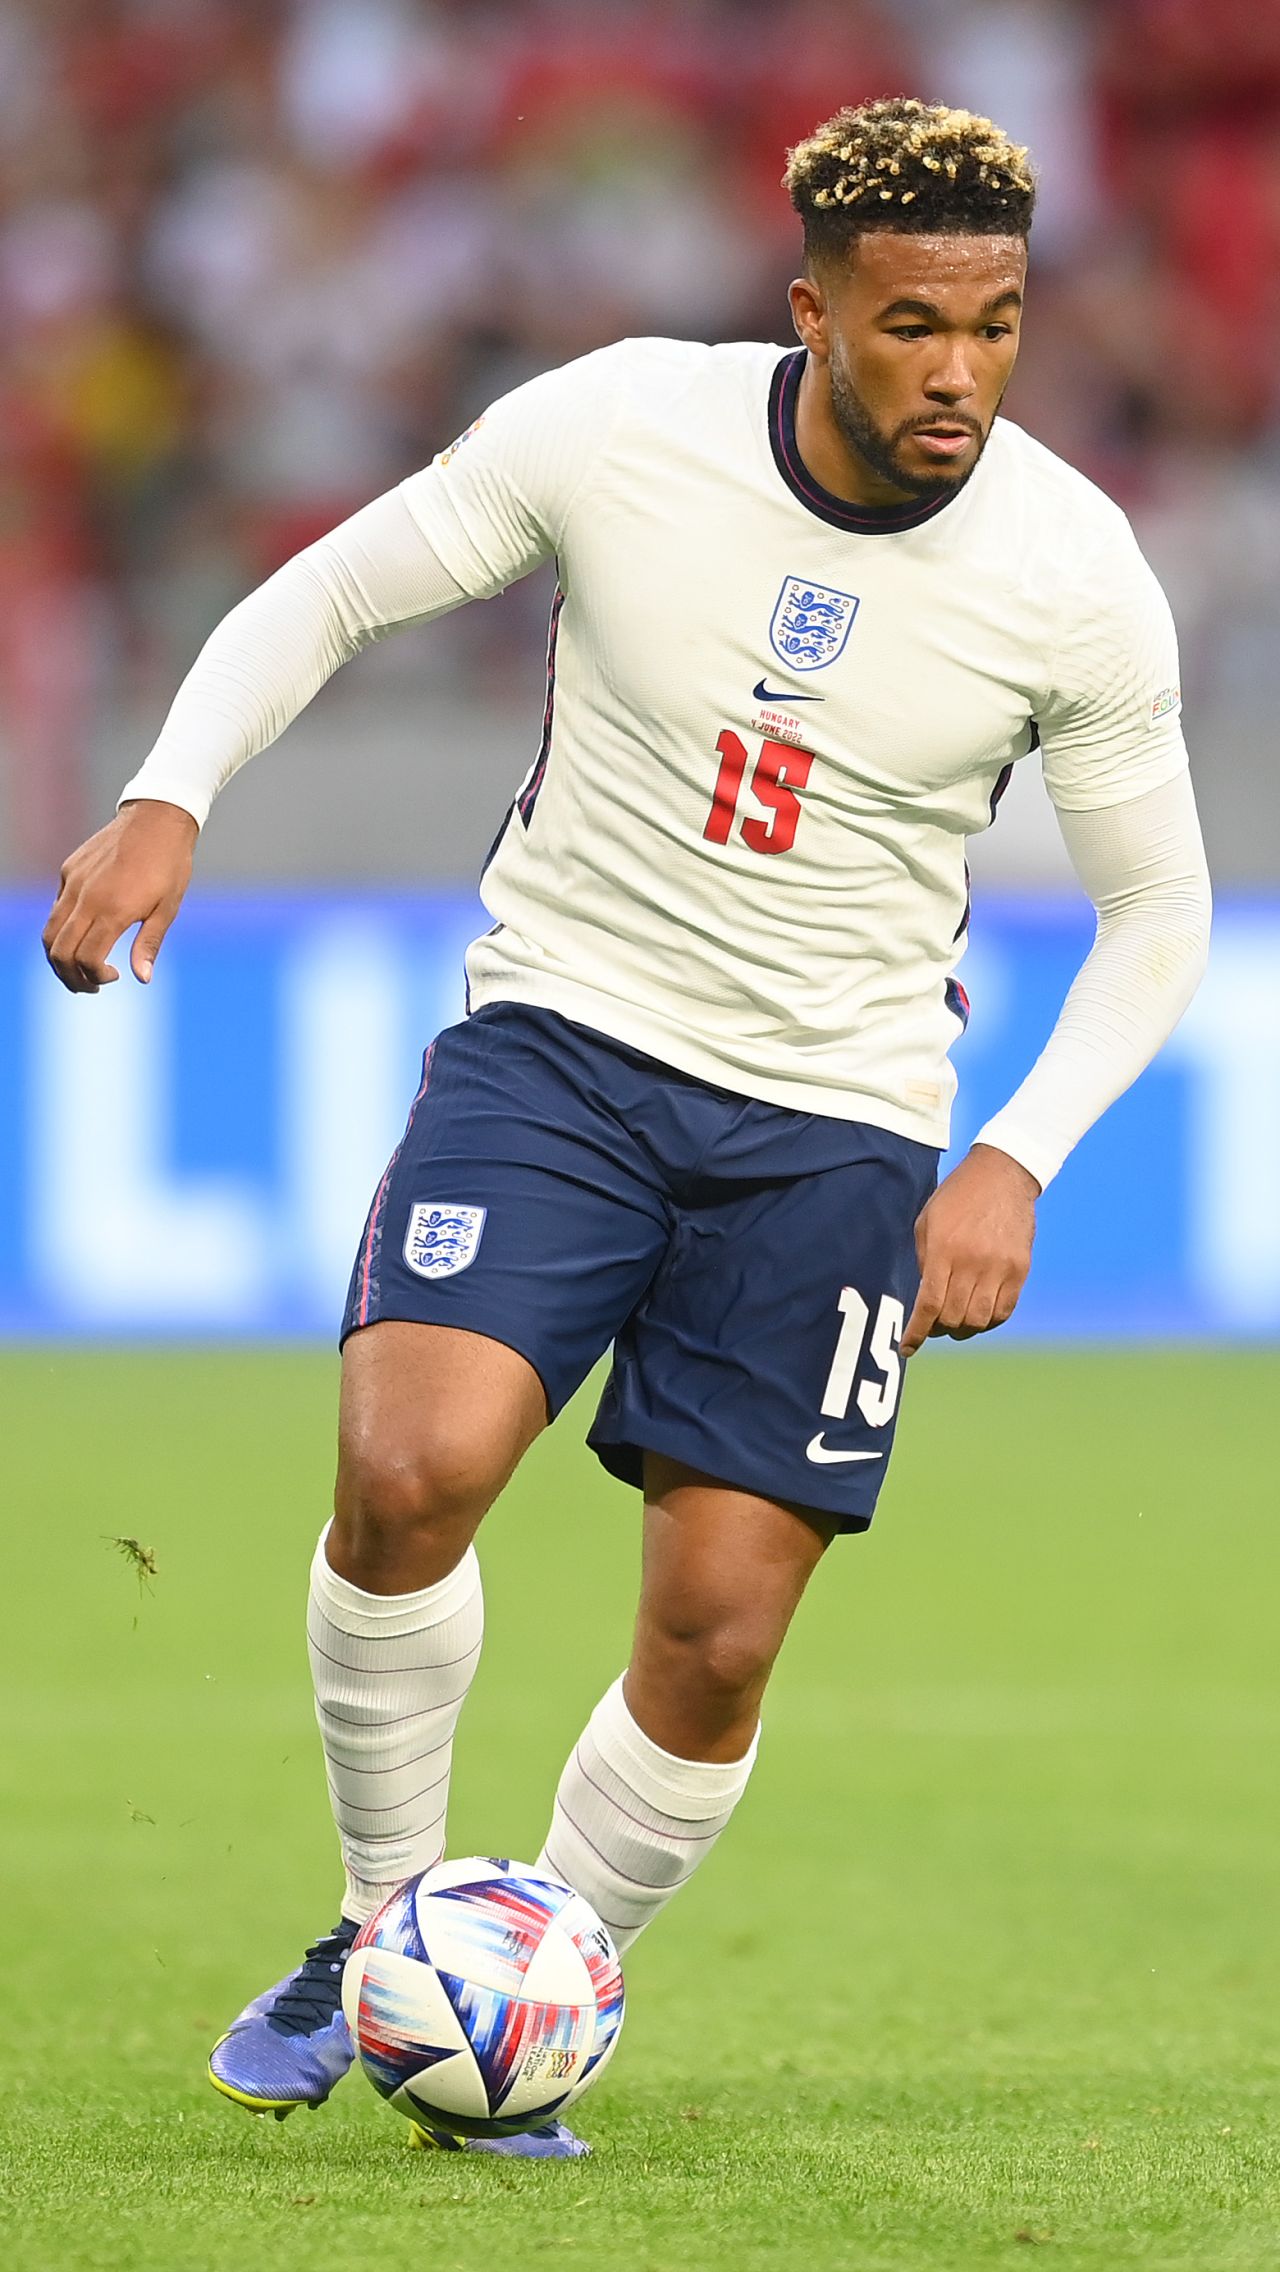 Рис Джеймс – сборная Англии и «Челси»